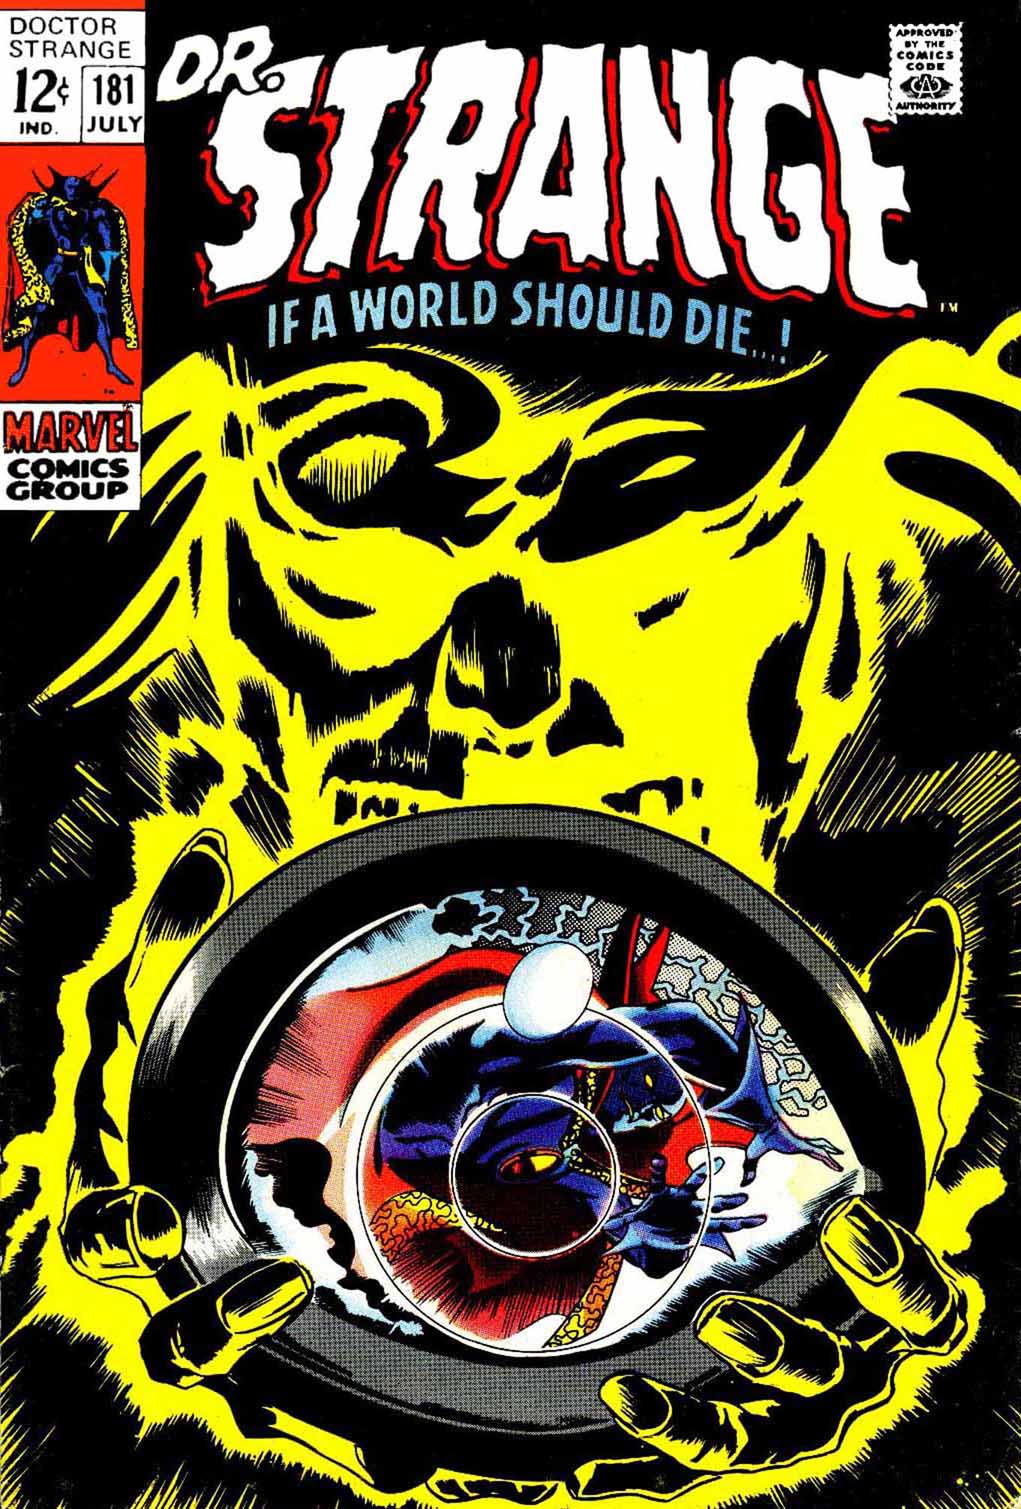 Read online Doctor Strange (1968) comic -  Issue #181 - 1